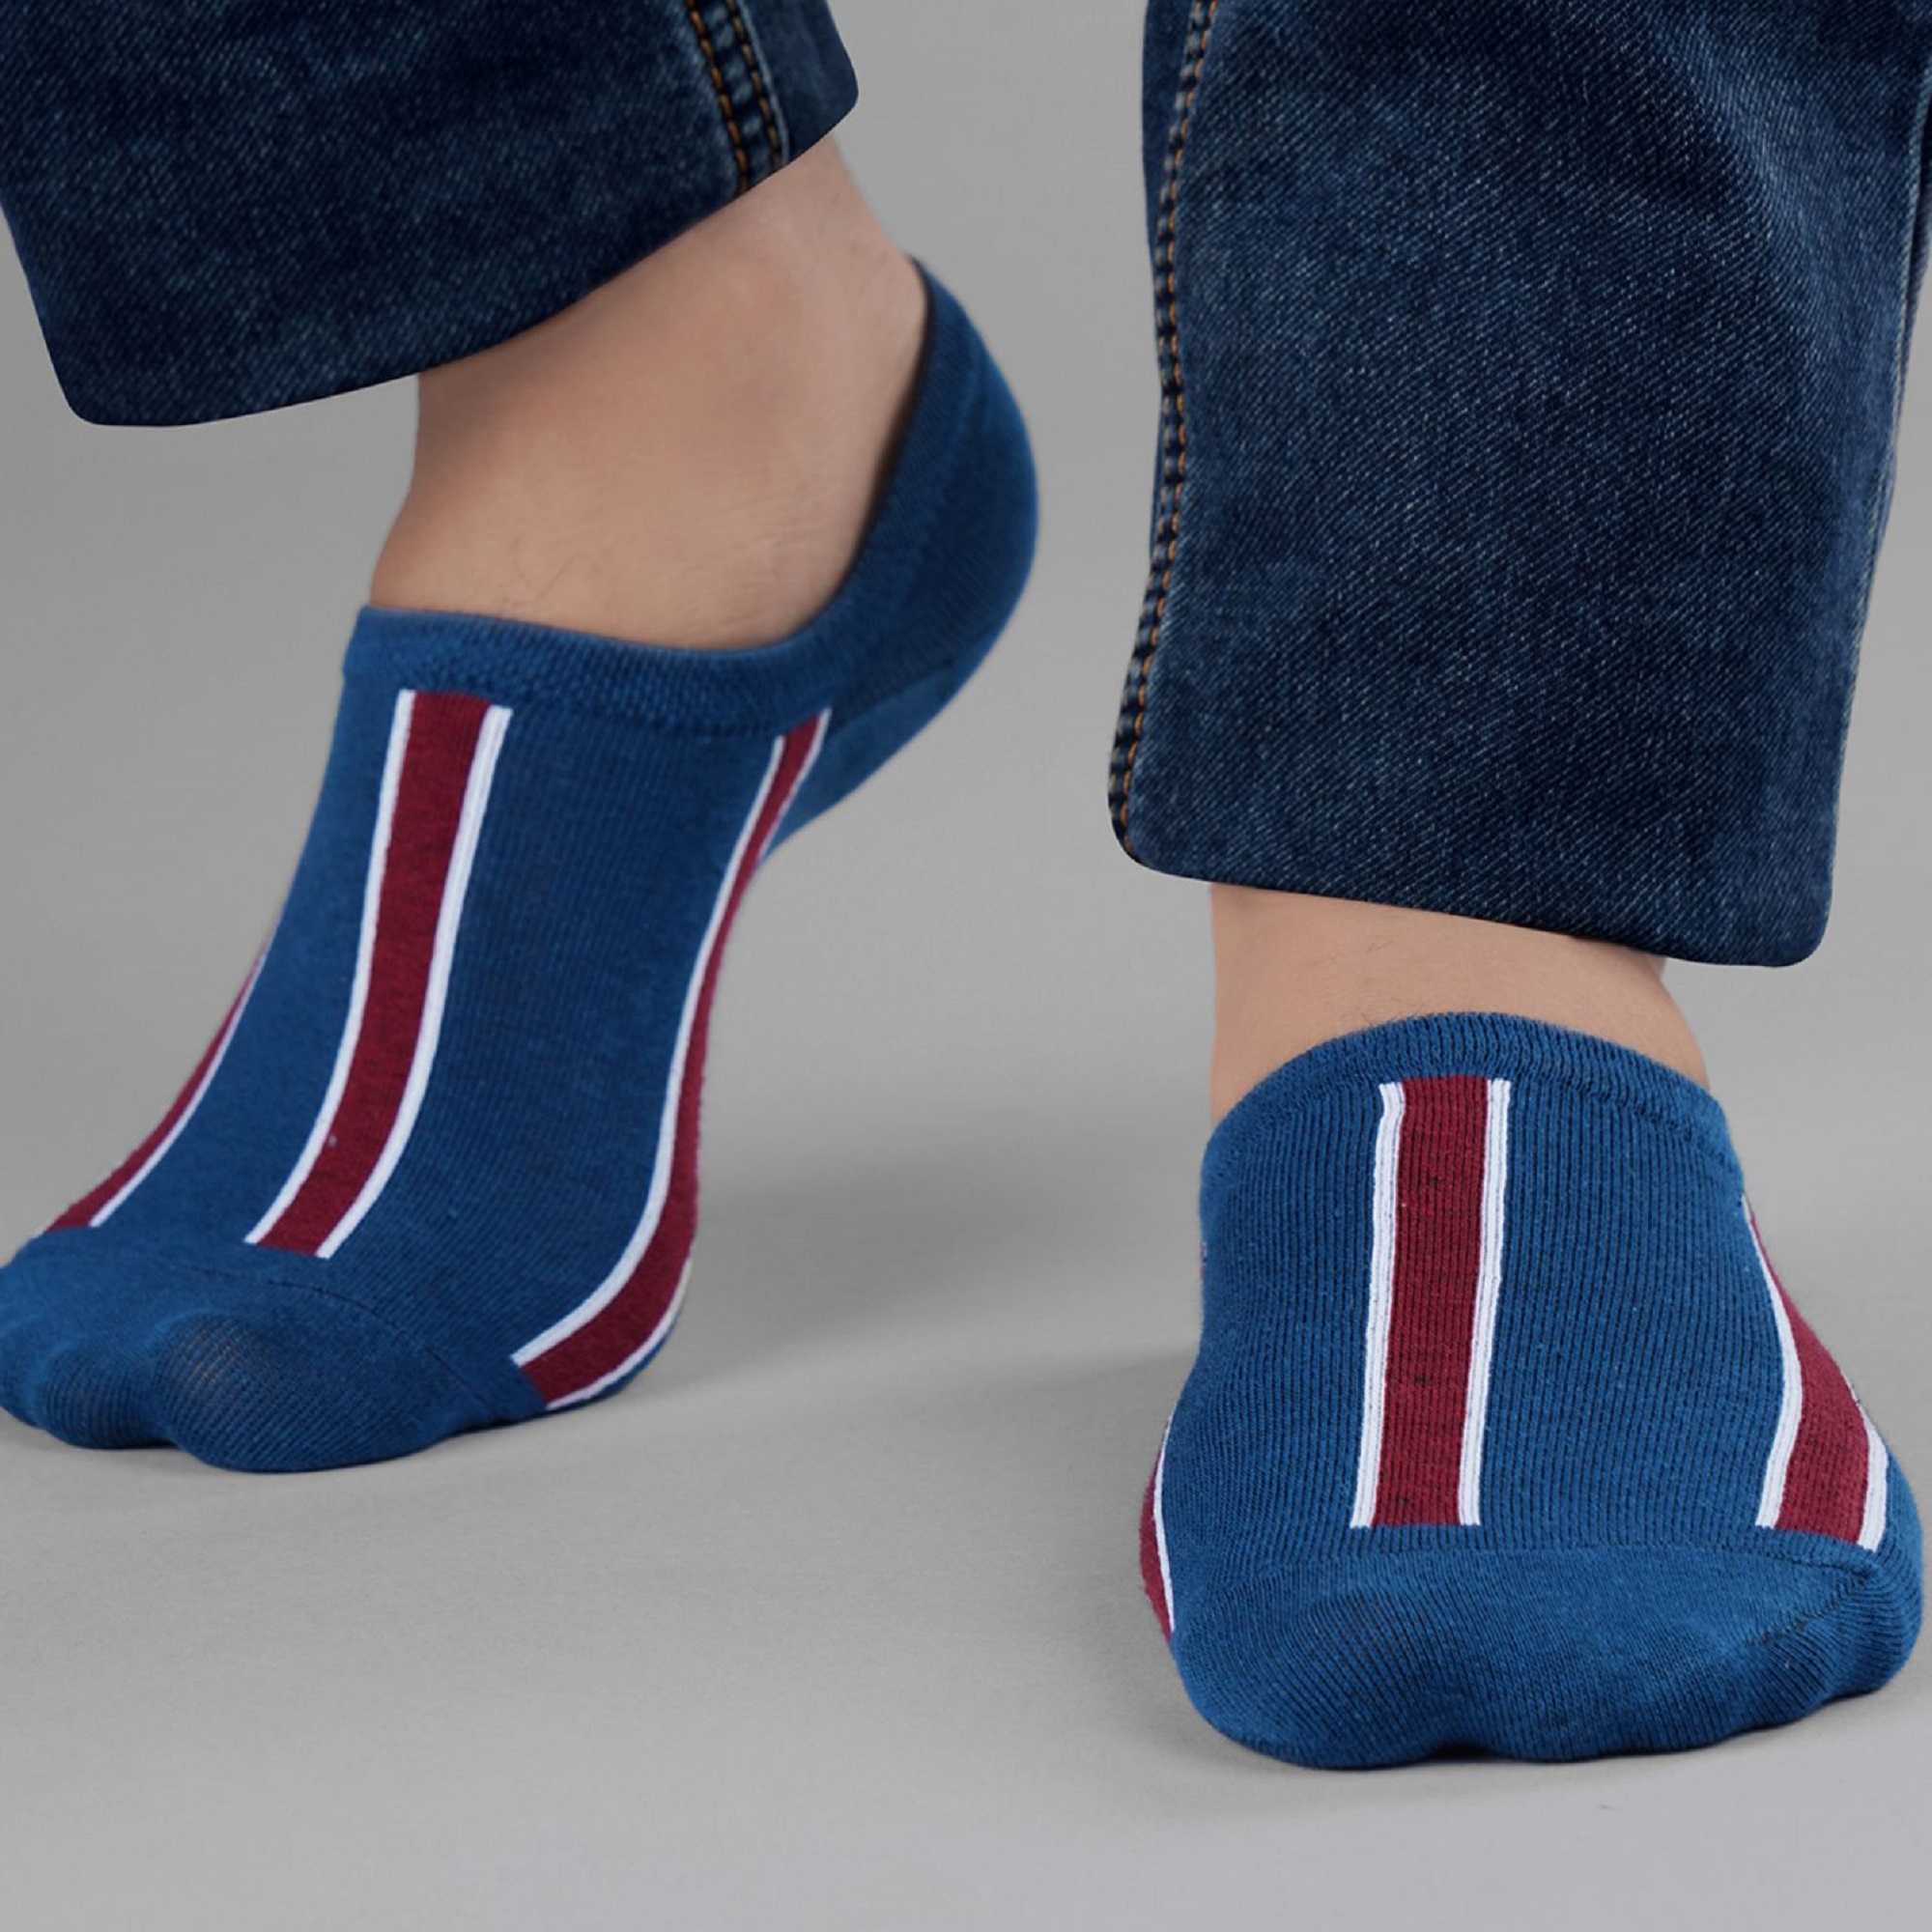 Albury: Blue & Red Striped Ankle Socks